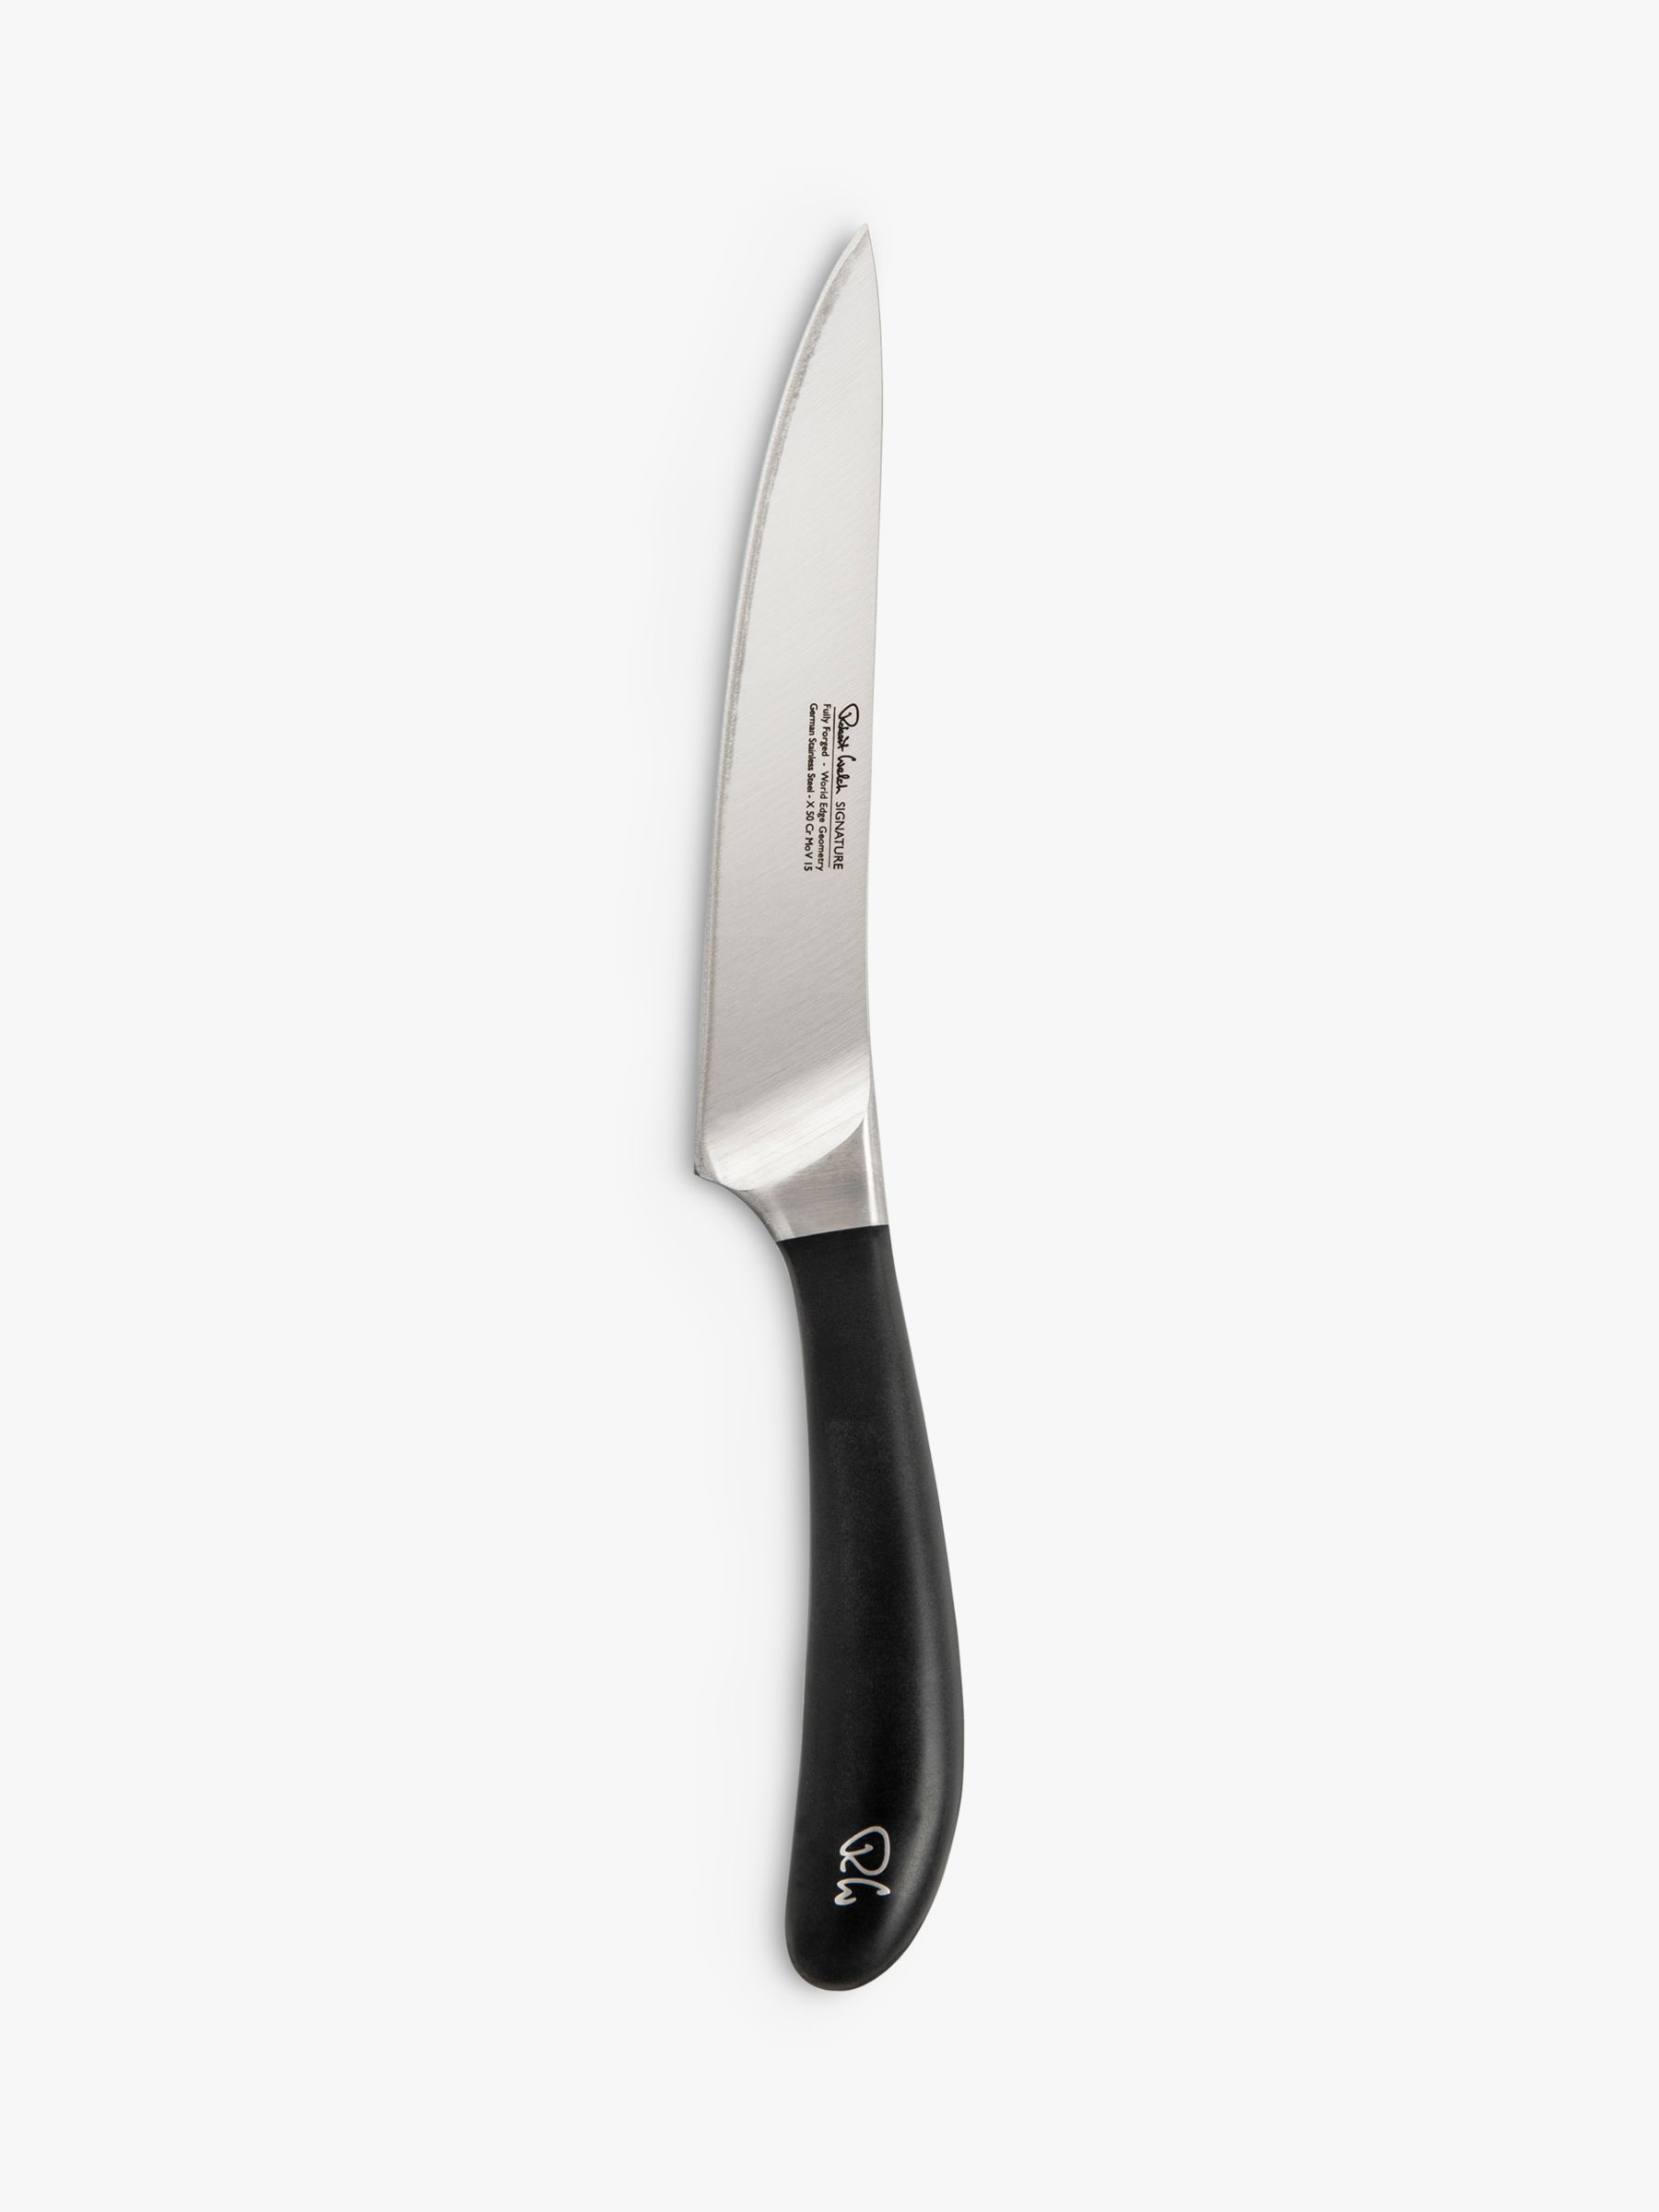 Robert Welch Signature Kitchen Knife, 14cm